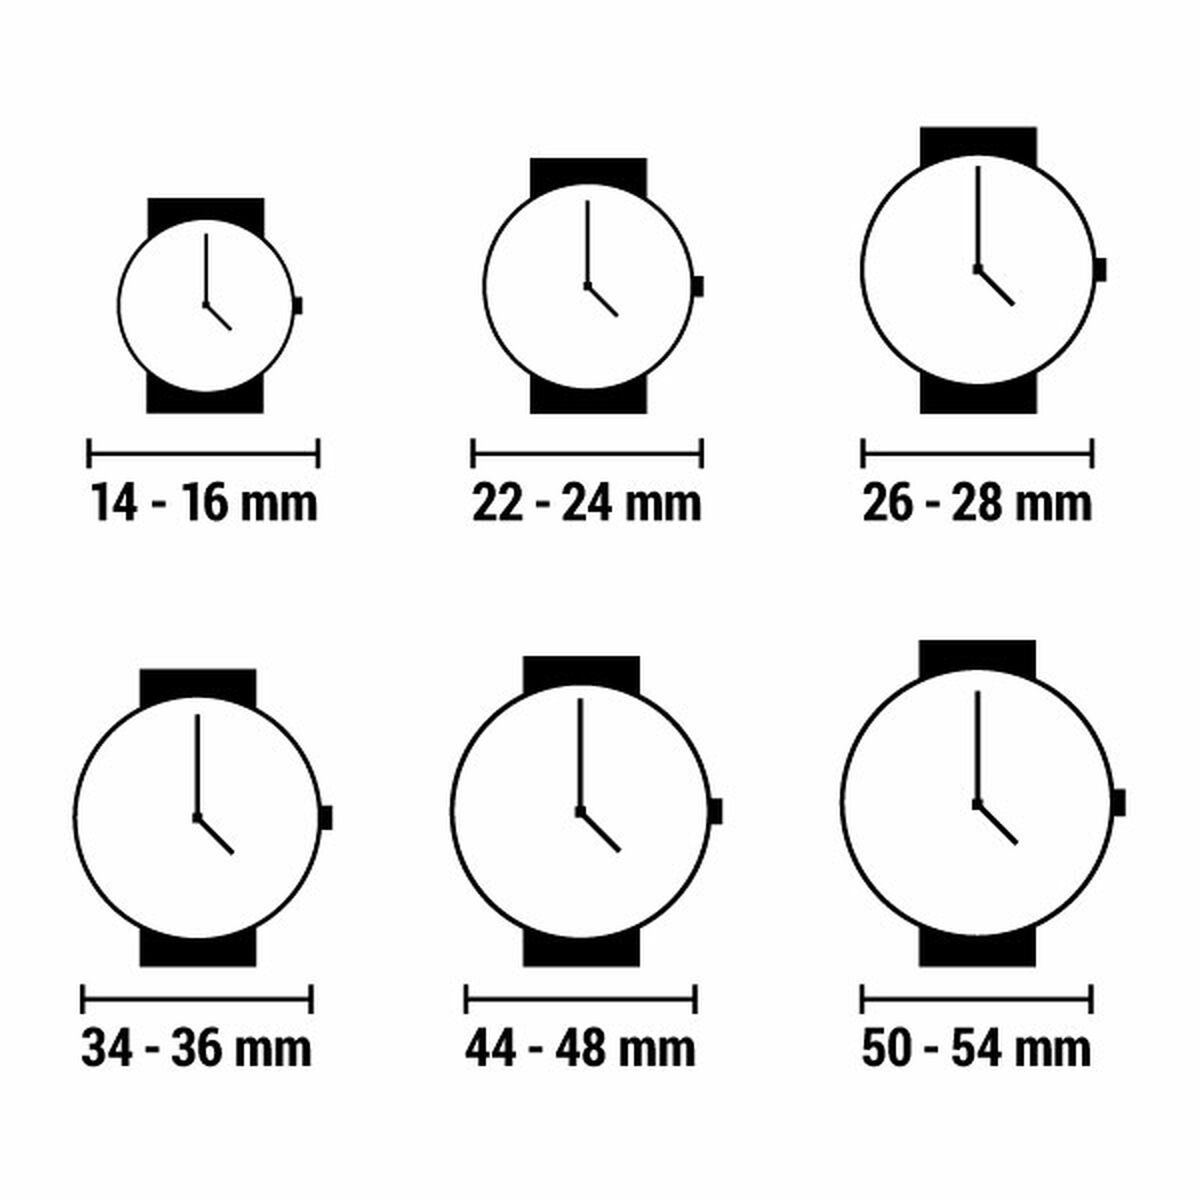 Horloge Dames Mark Maddox HC6010-45 (Ø 44 mm)